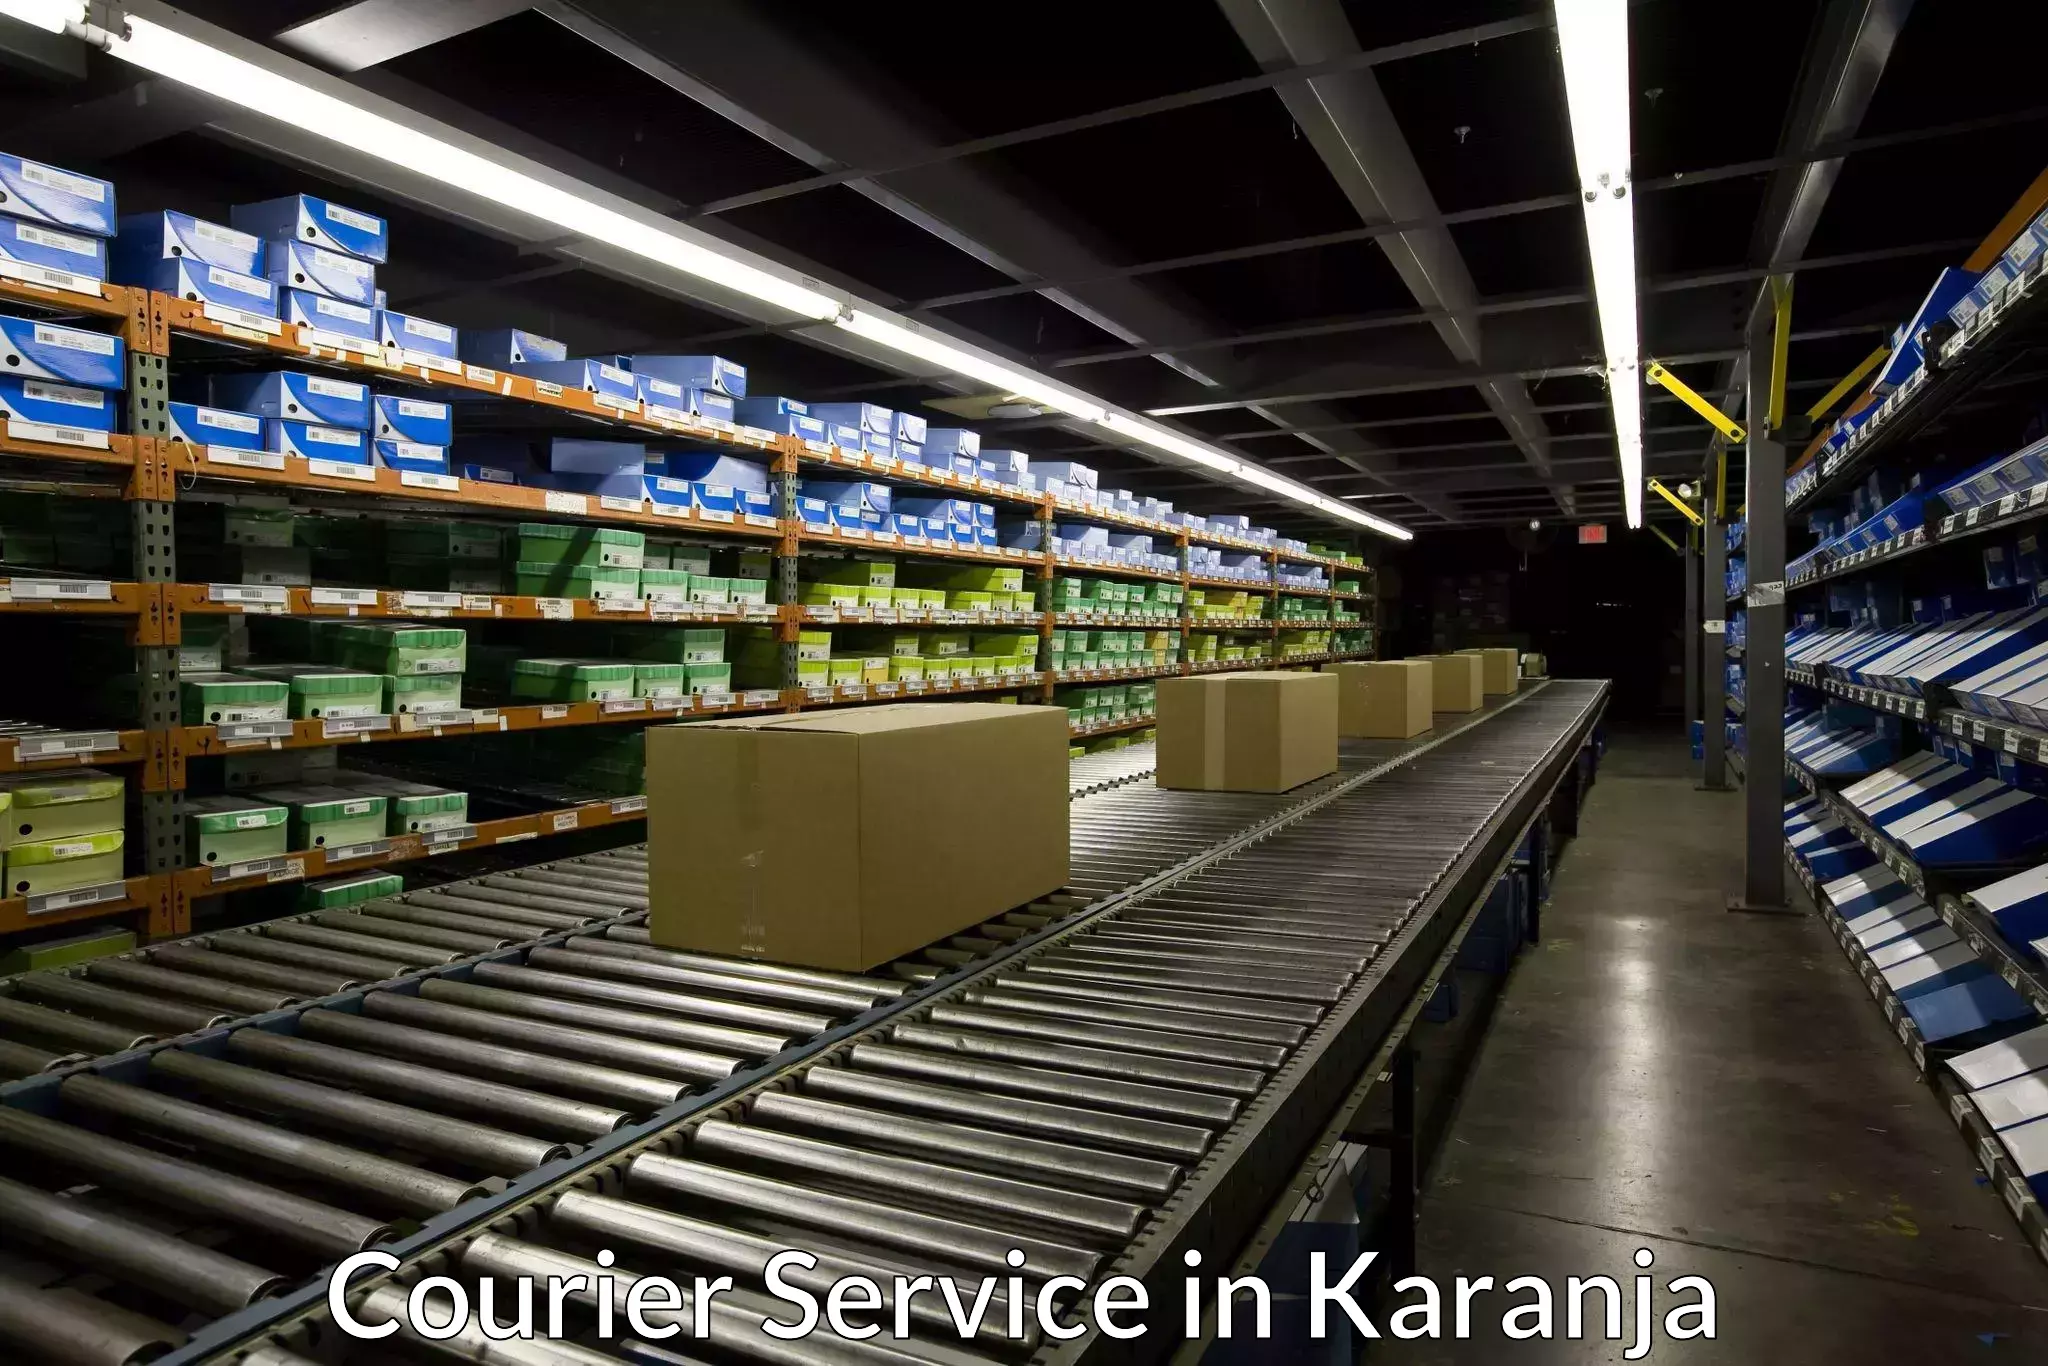 International parcel service in Karanja